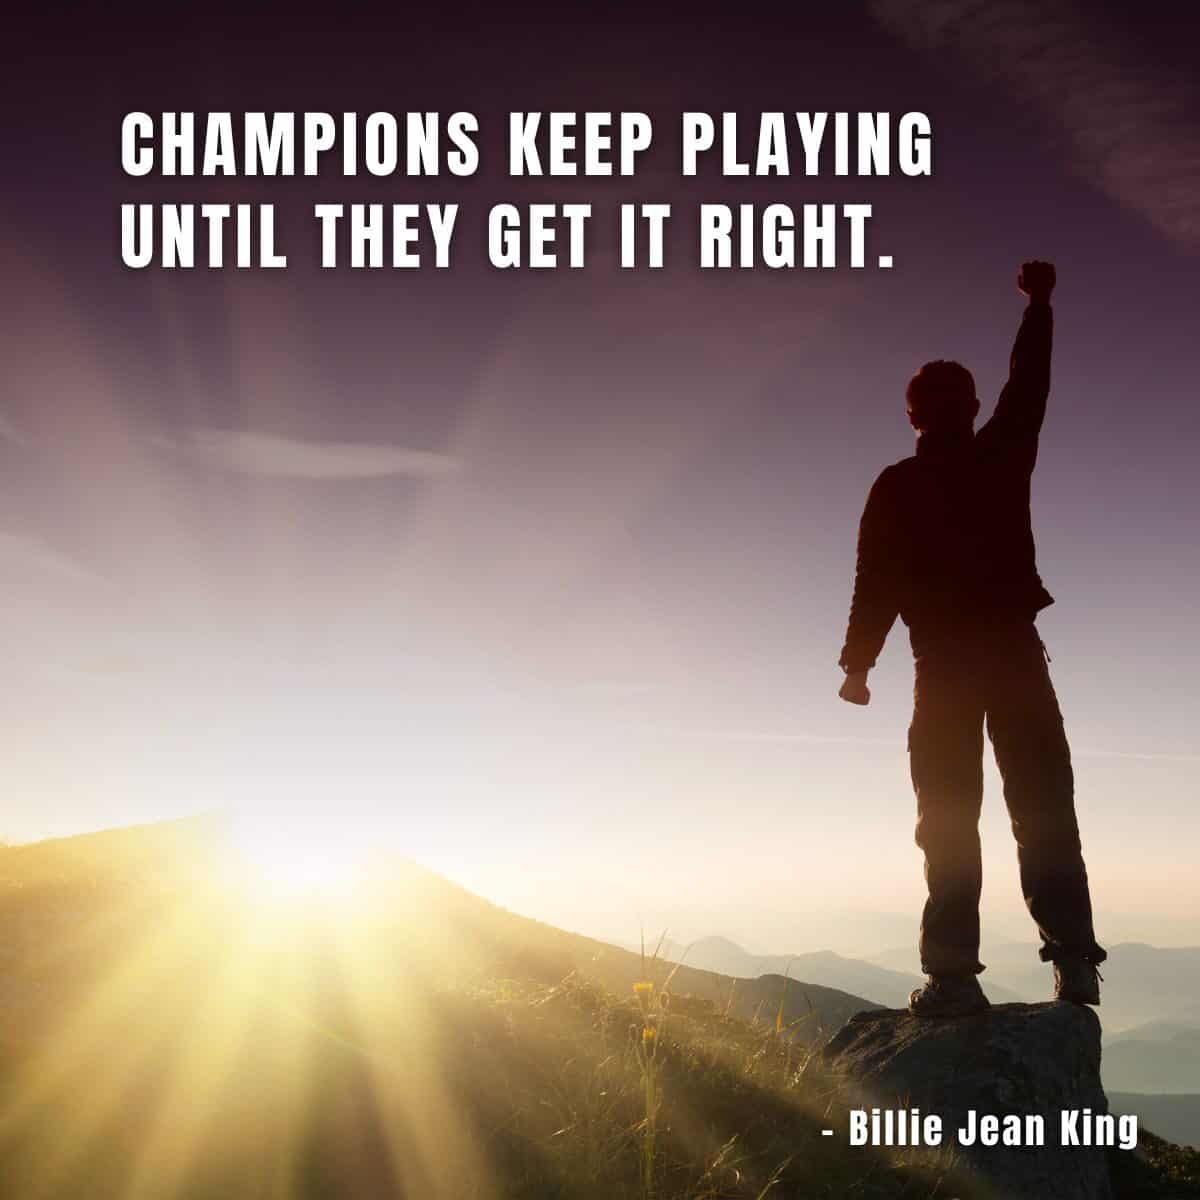 Billie Jean King quote